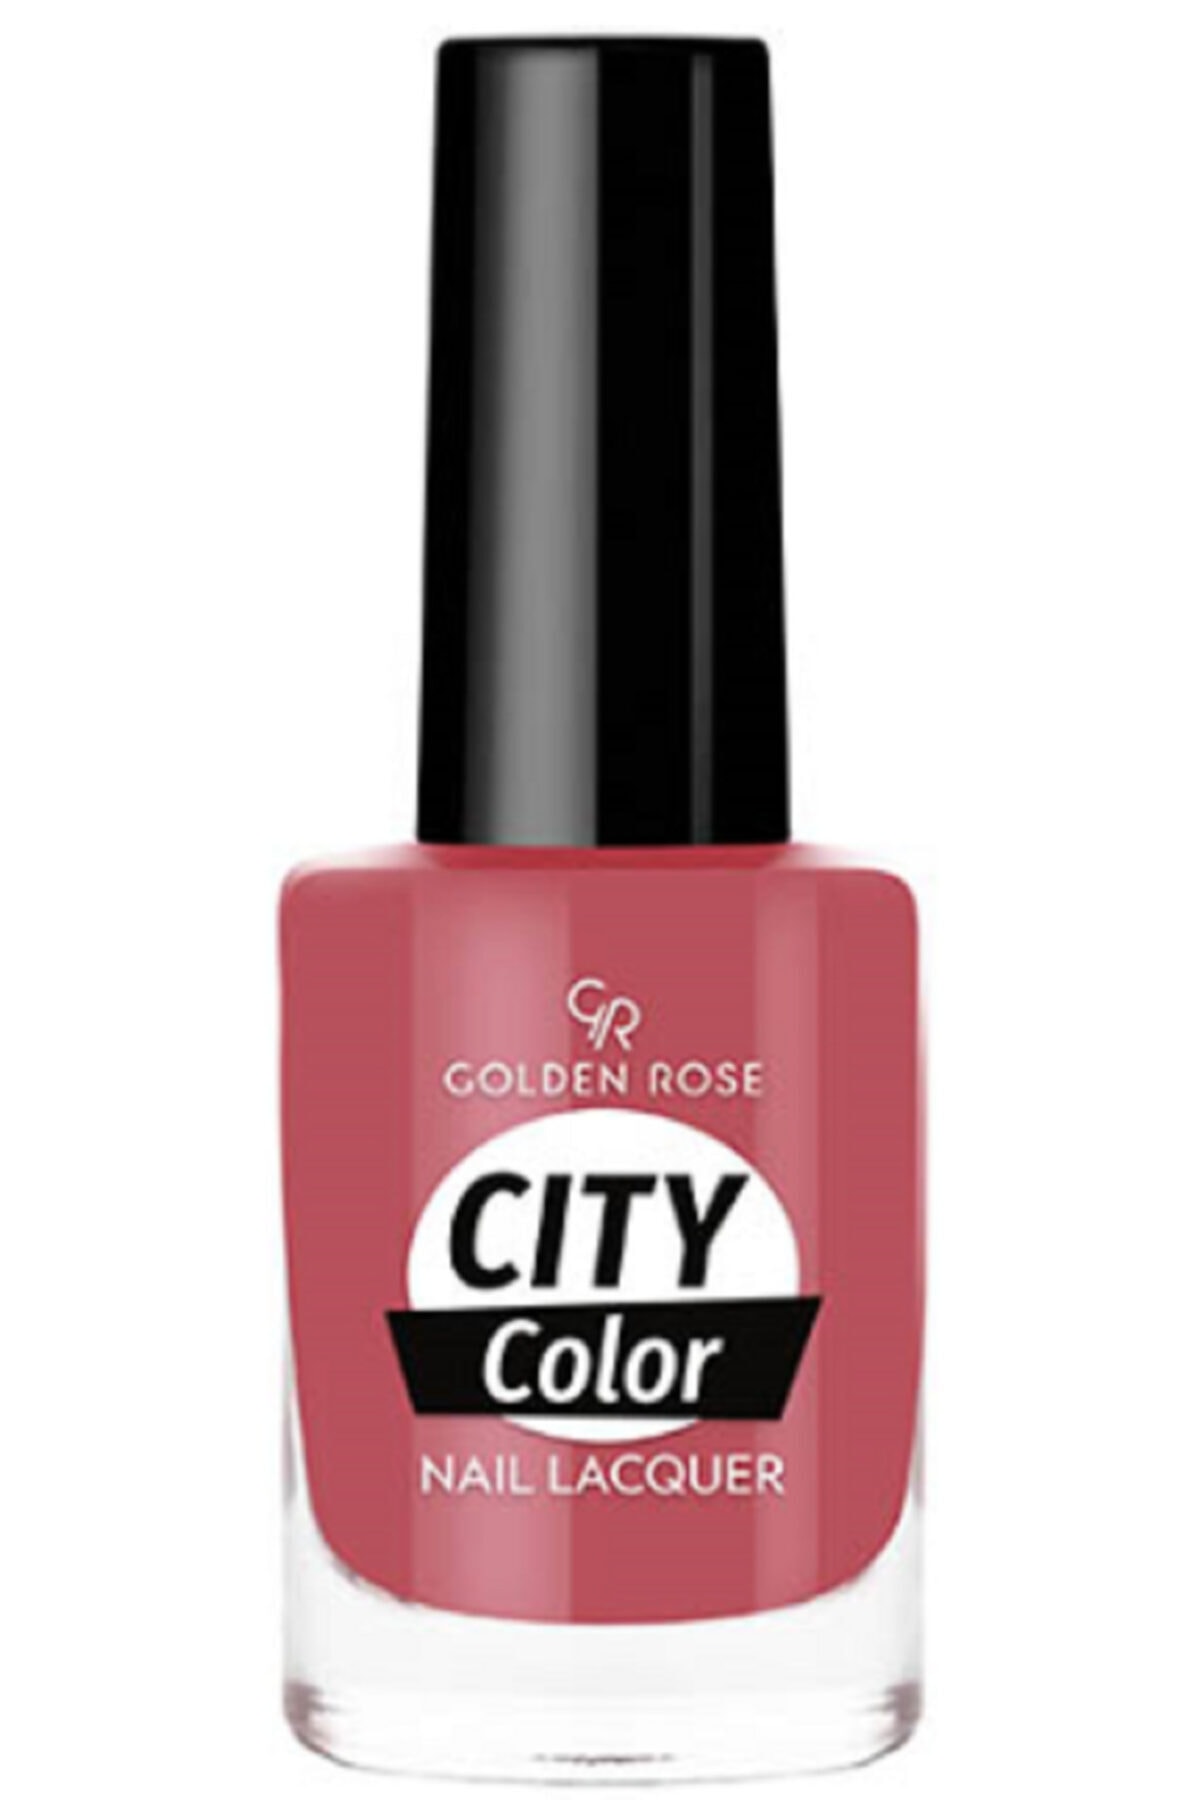 لاک ناخن سیتی کالر City color رنگ بنفش  شماره 53 گلدن رز Golden Rose